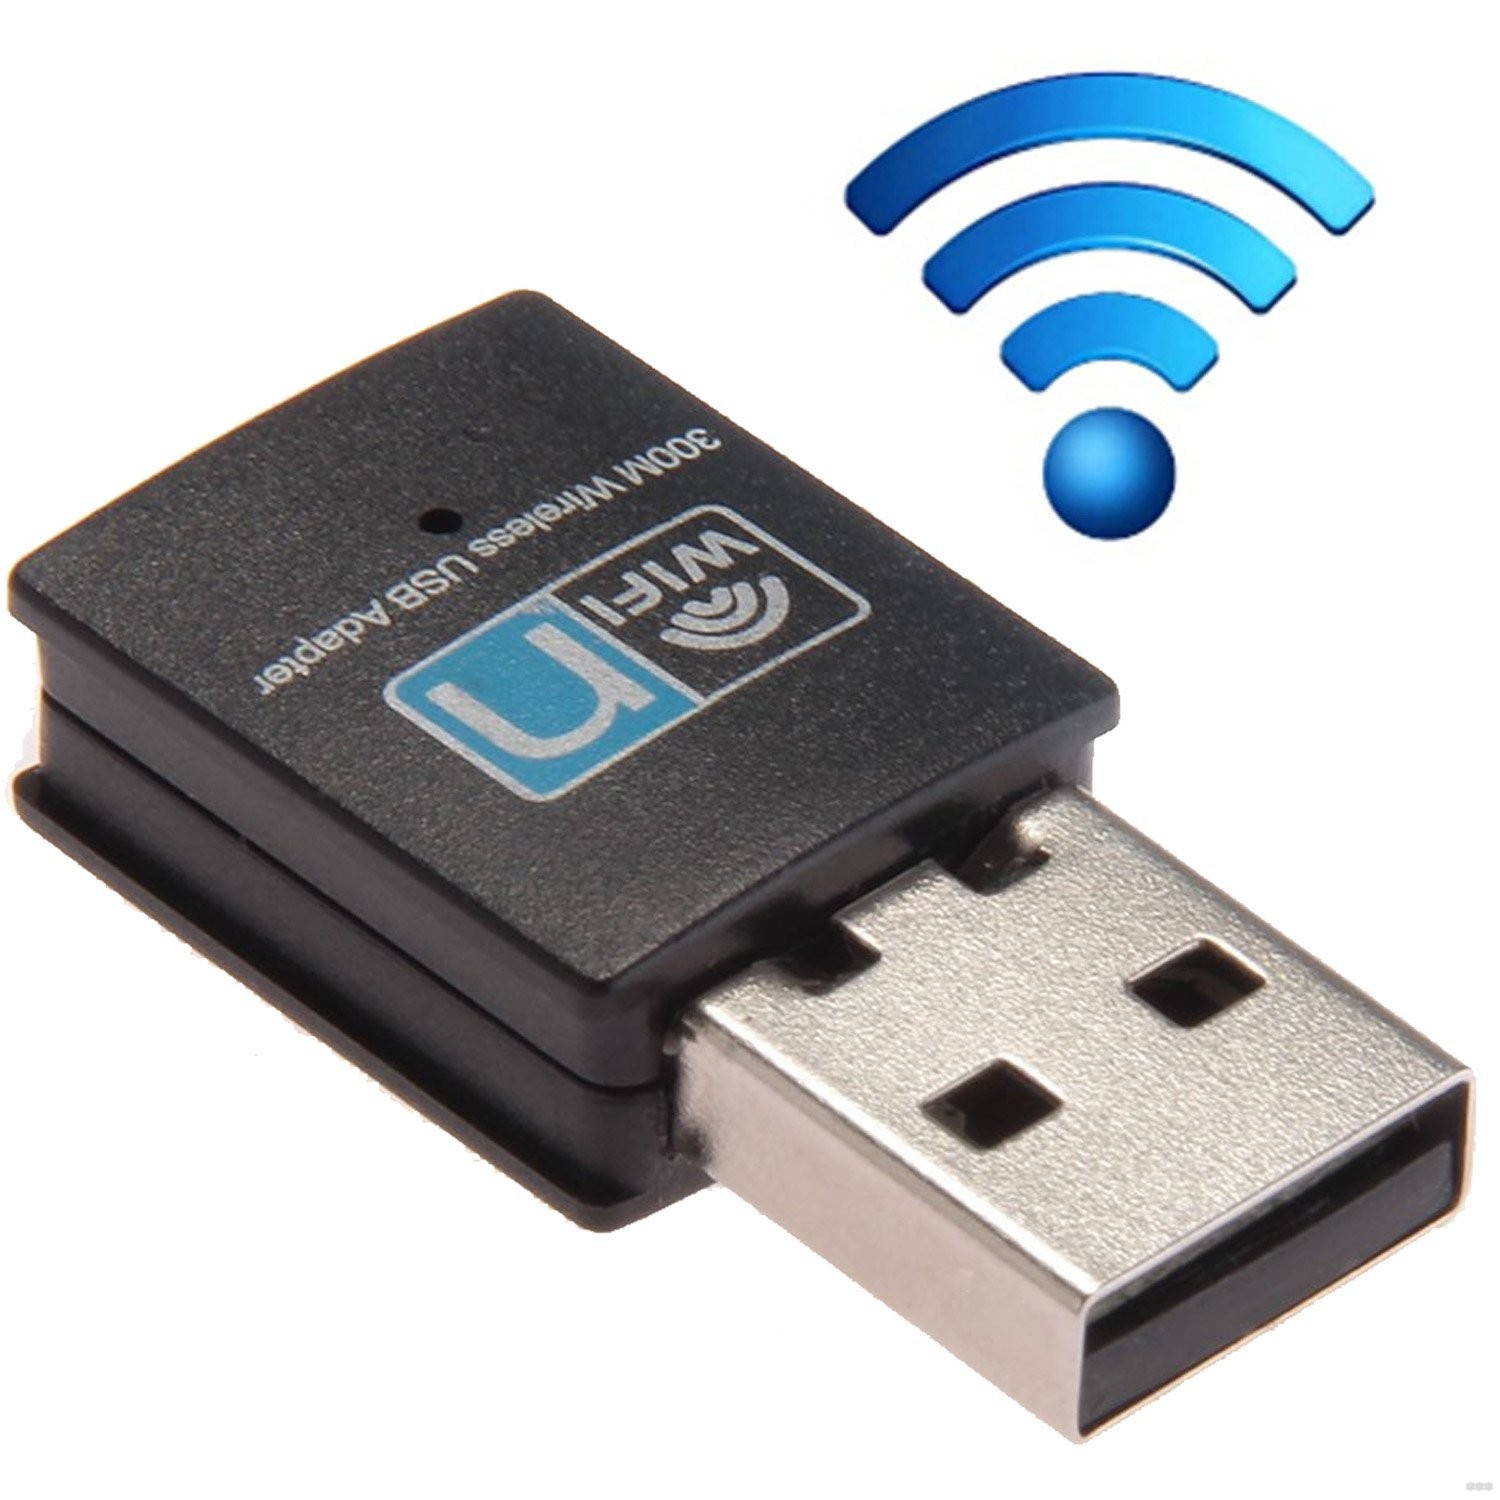 Подключите mini pci-e к pci-e x1 WIFI адаптеру и мини адаптеру или как подключить ноутбук wifi к пк⁠⁠